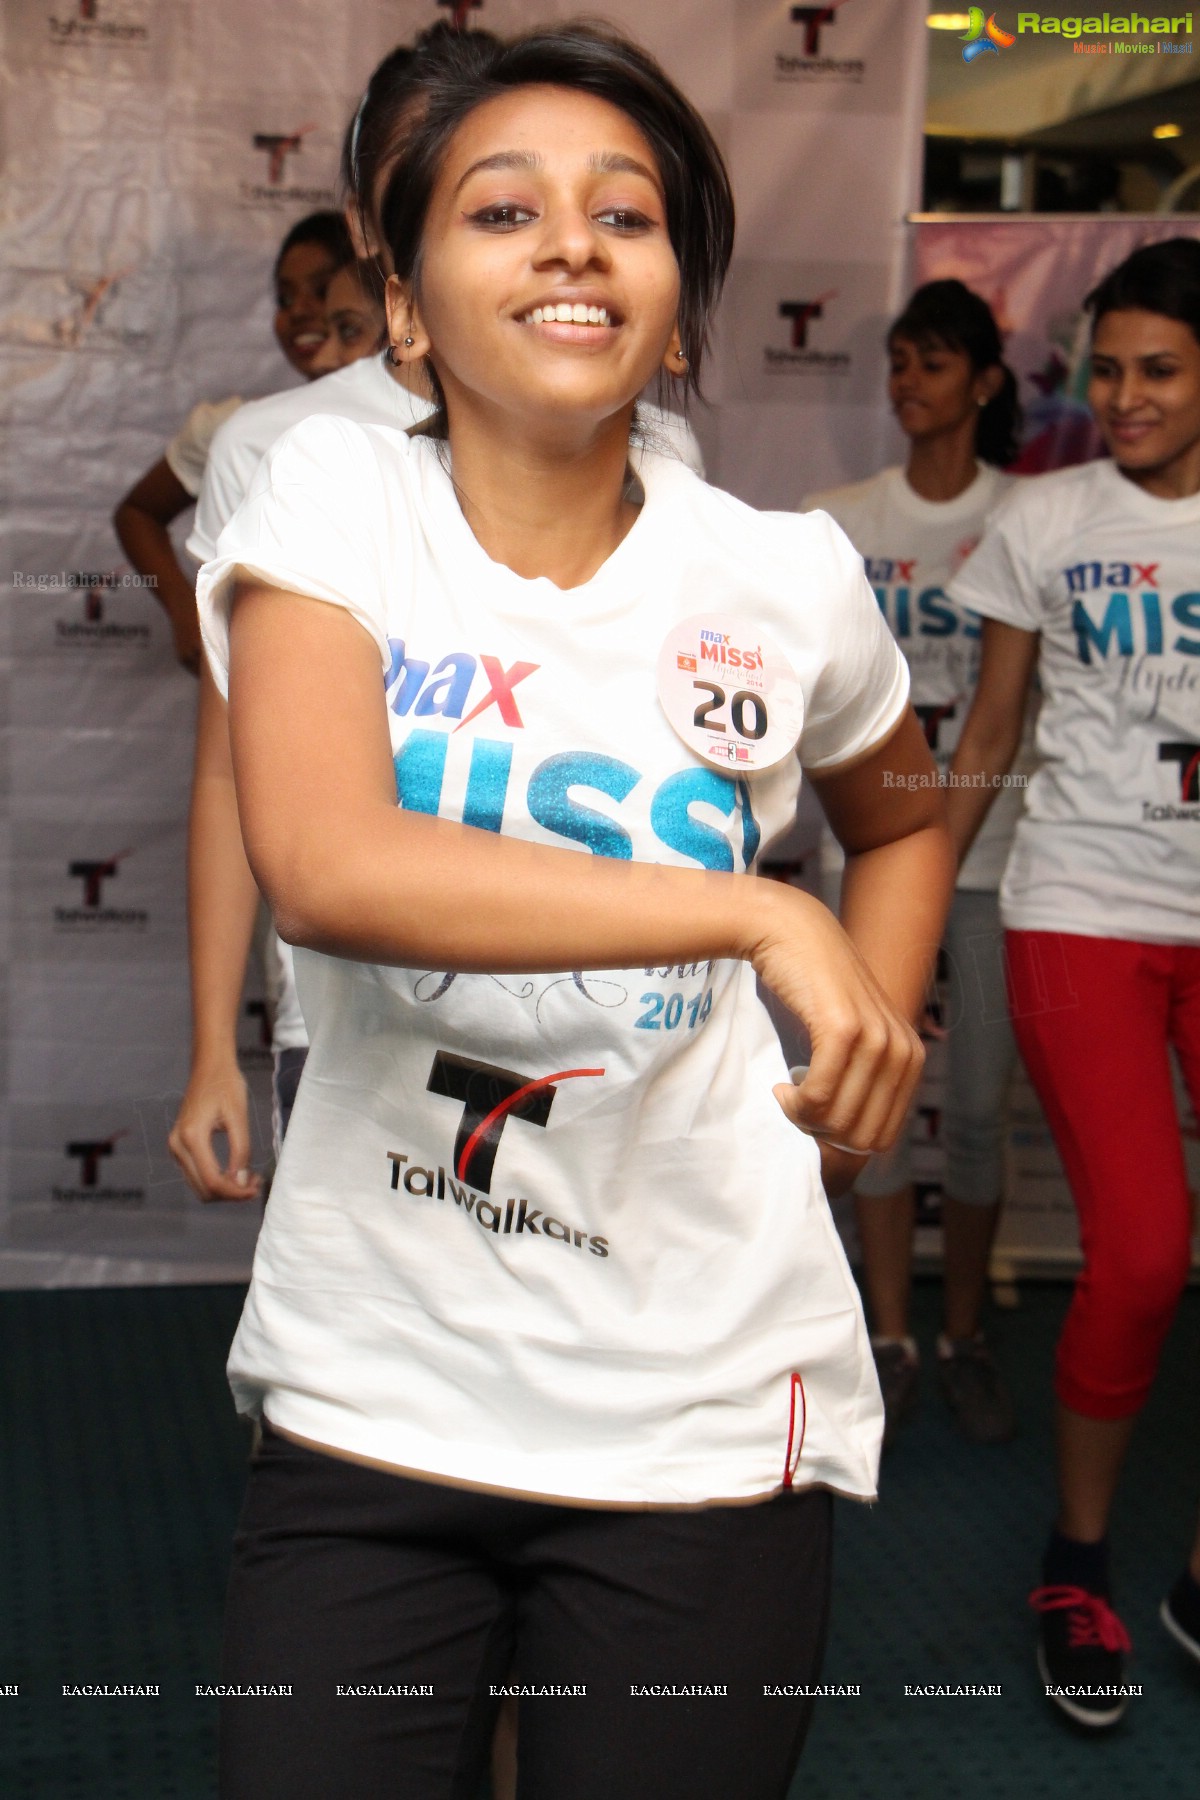 Max Miss Hyderabad 2014 Finalists at Talwalkars, Hyderabad